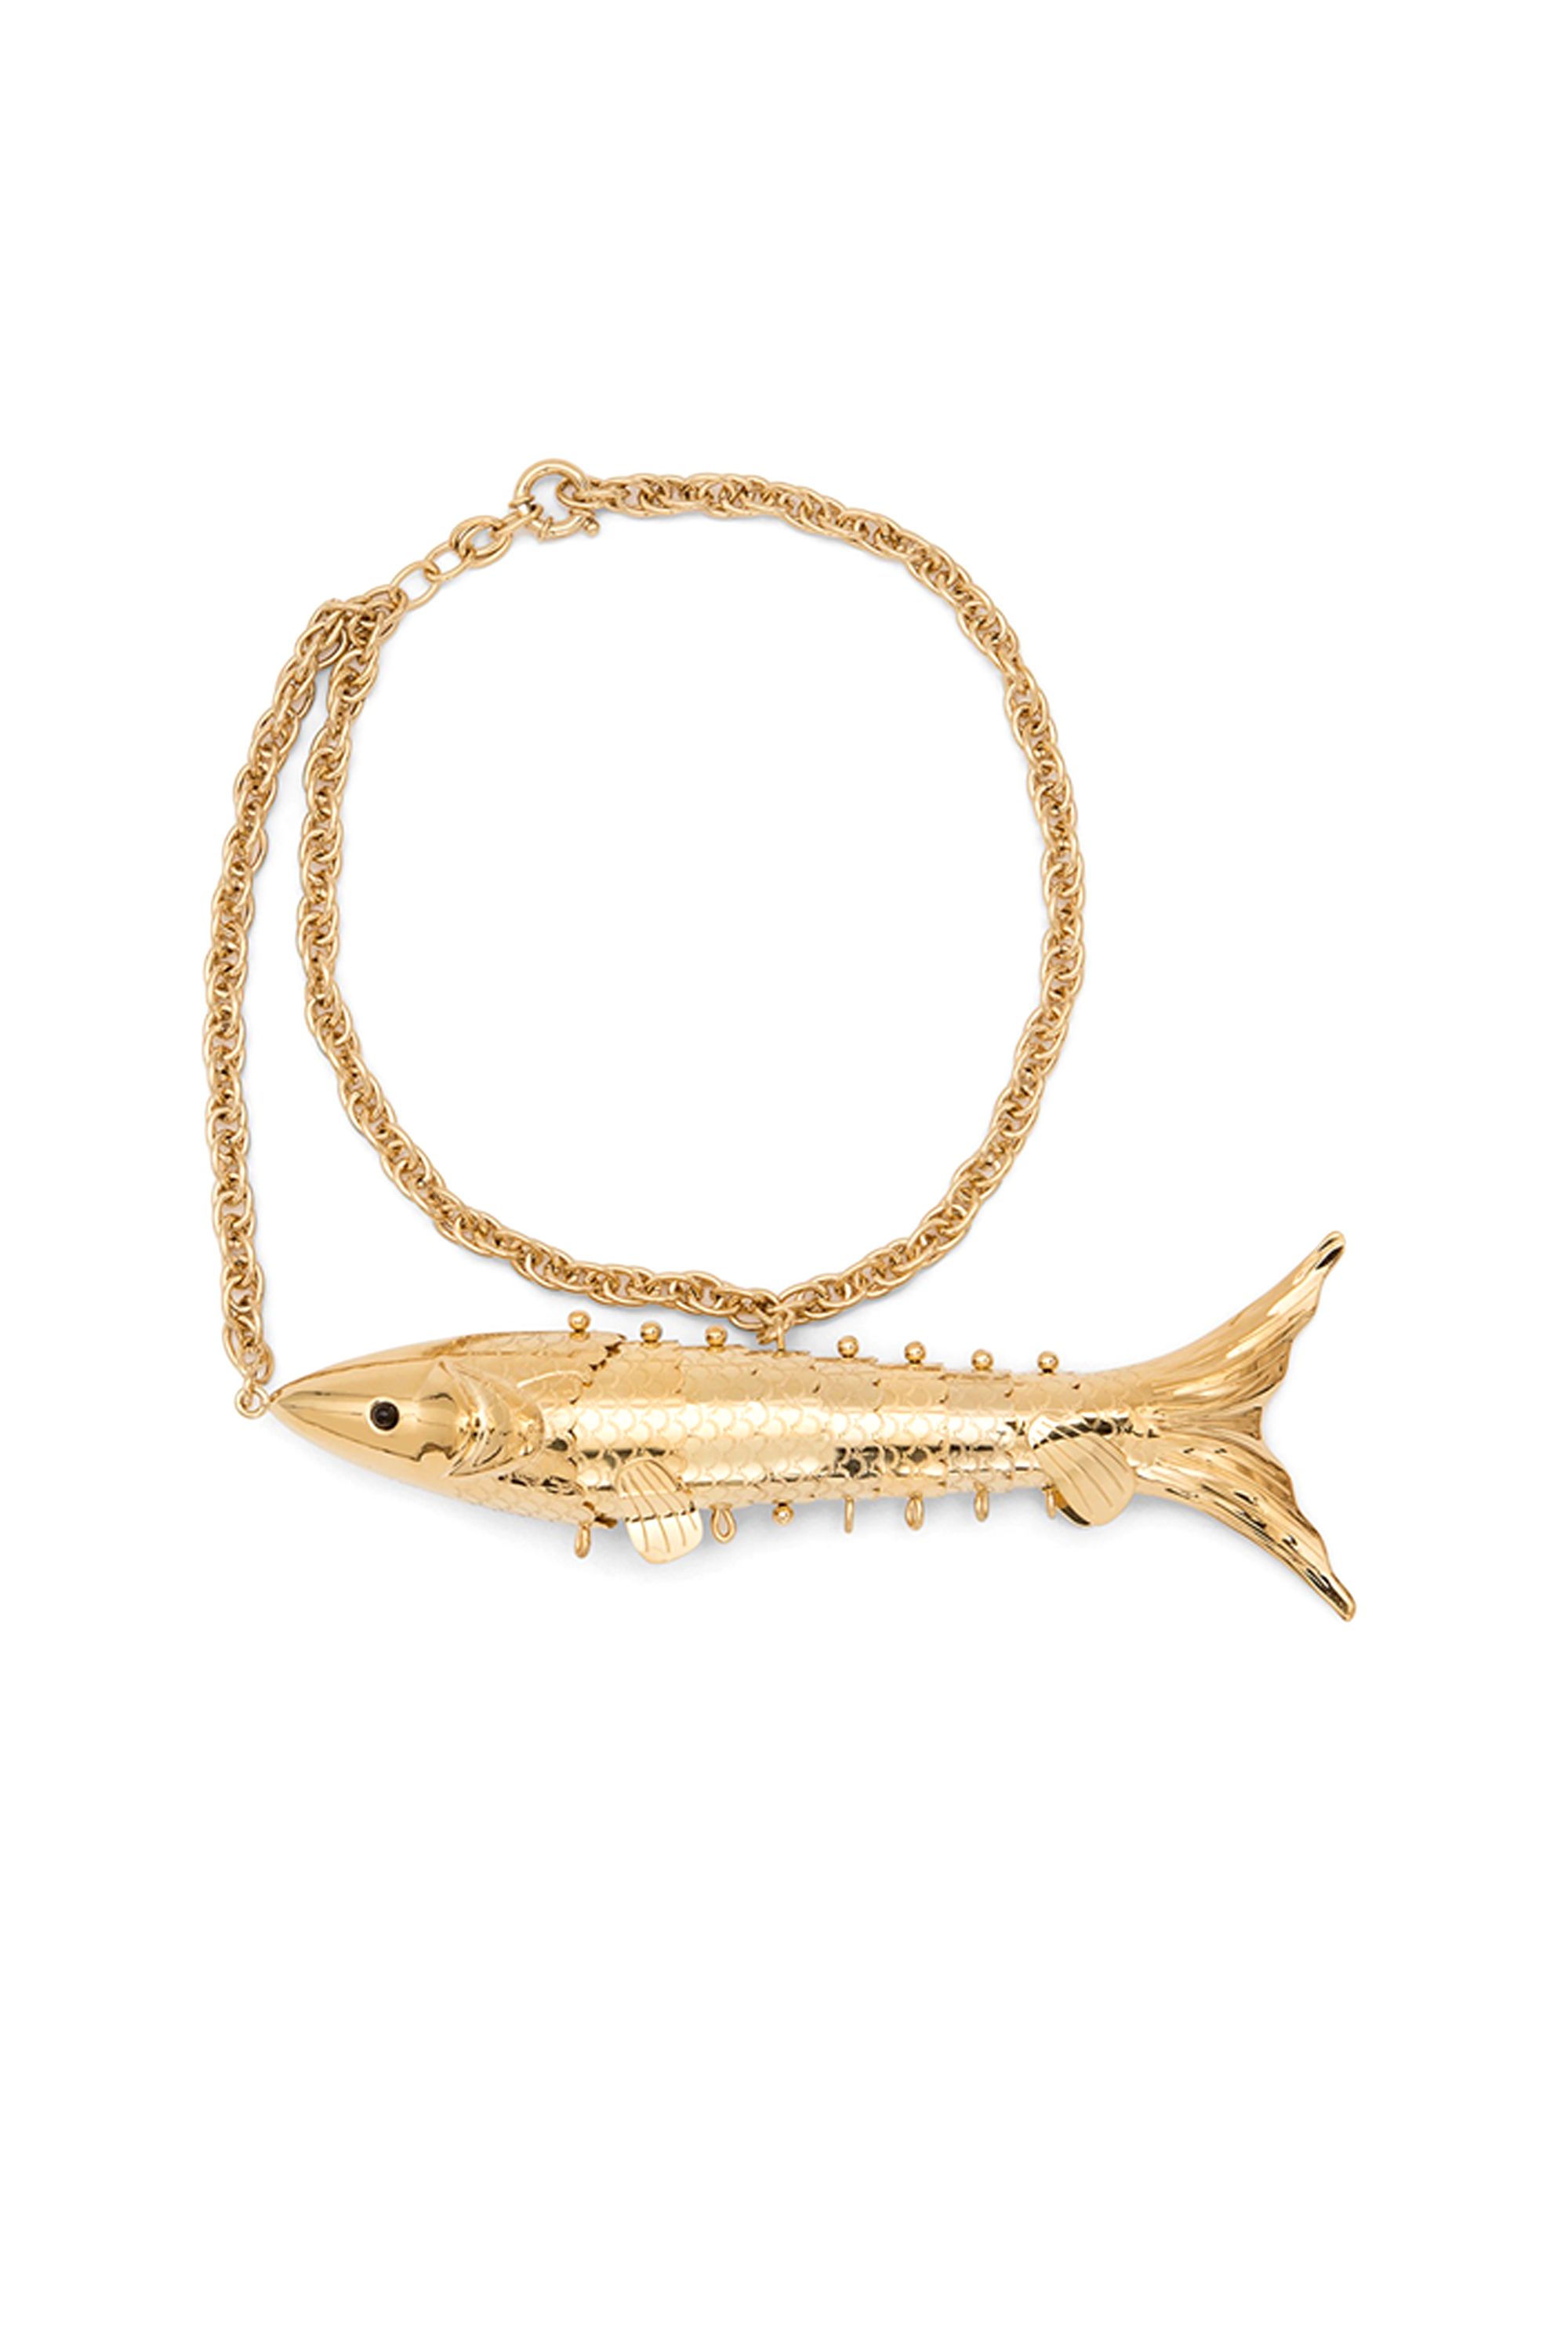 Obsessed with this fish necklace @ZARA #zarahaul #fish #necklace #zar... |  TikTok